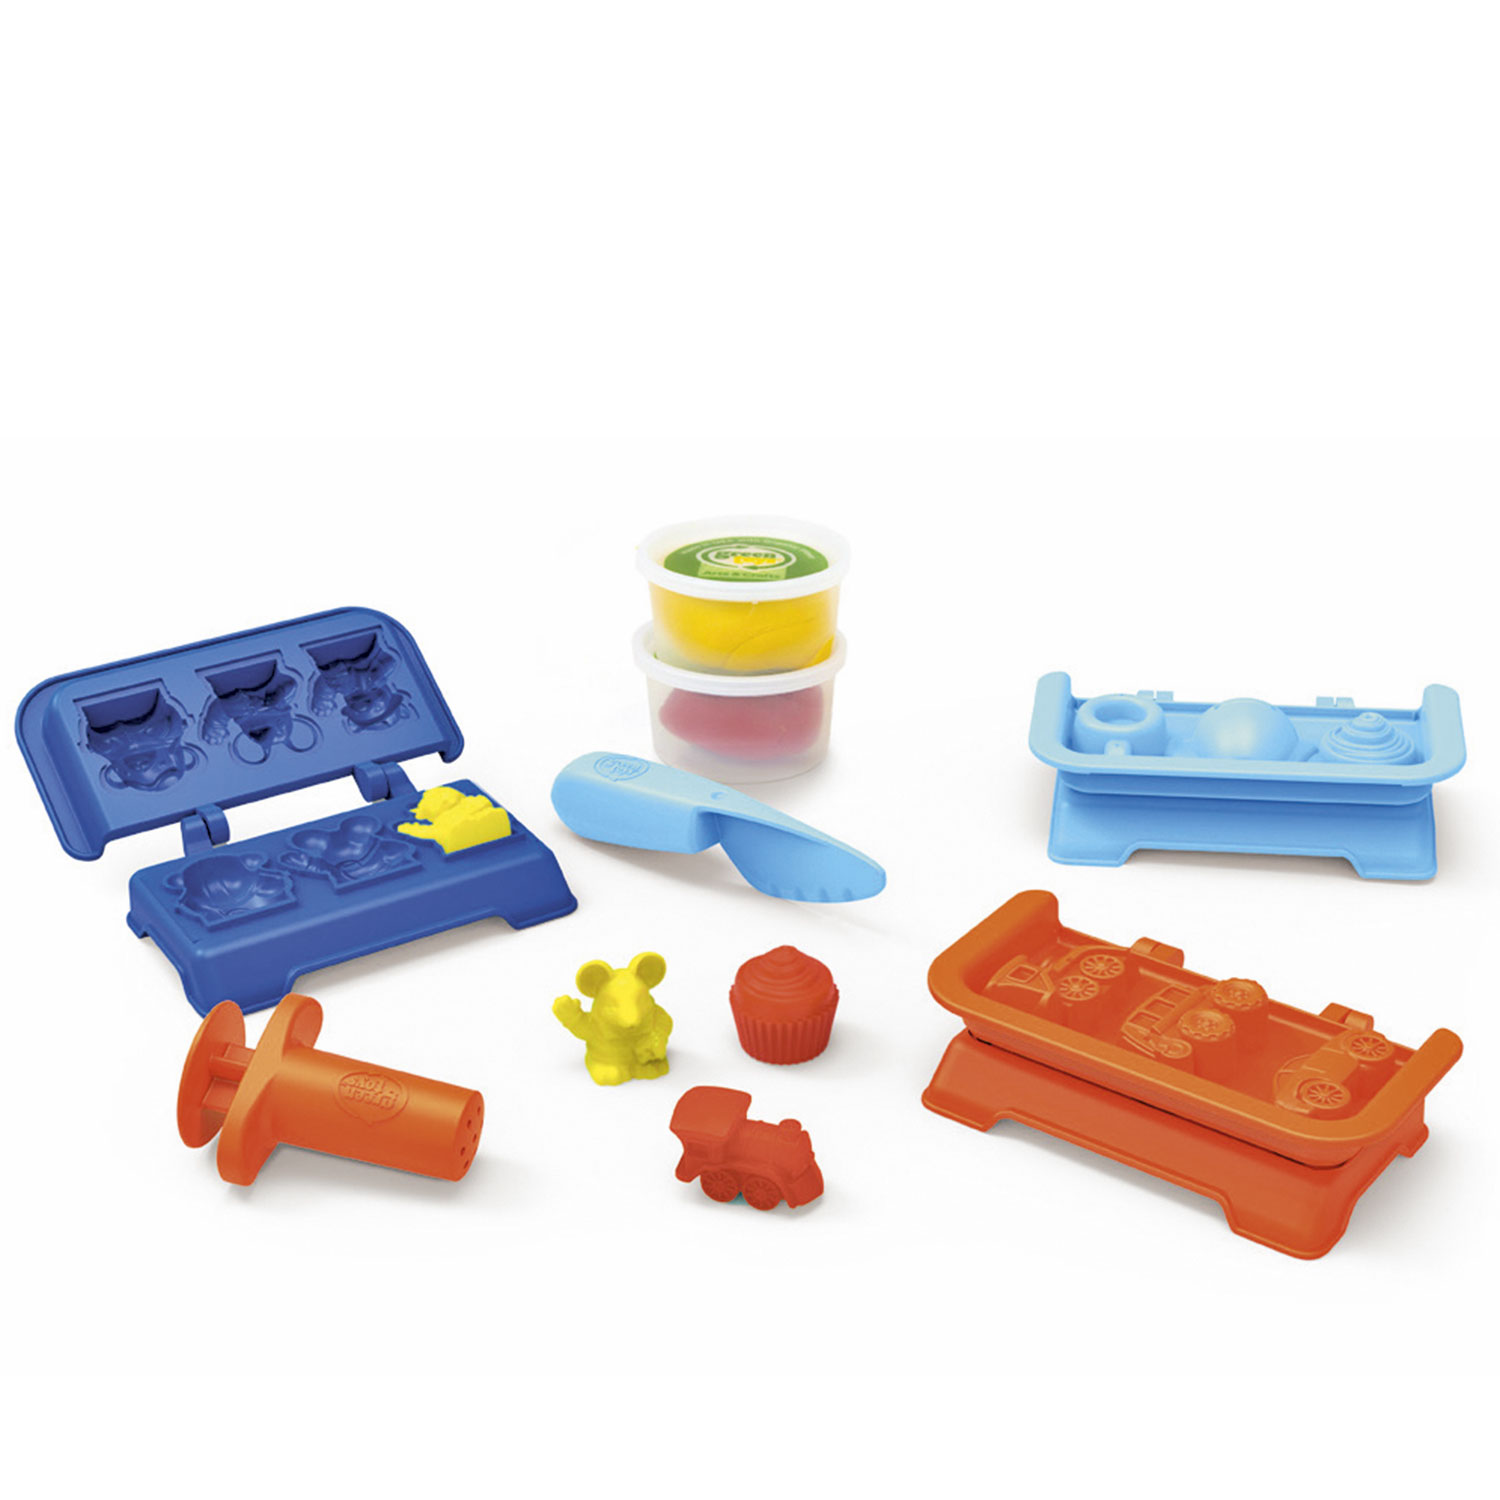 Öko-Knete Set Spielzeug / Toy Maker Dough Set